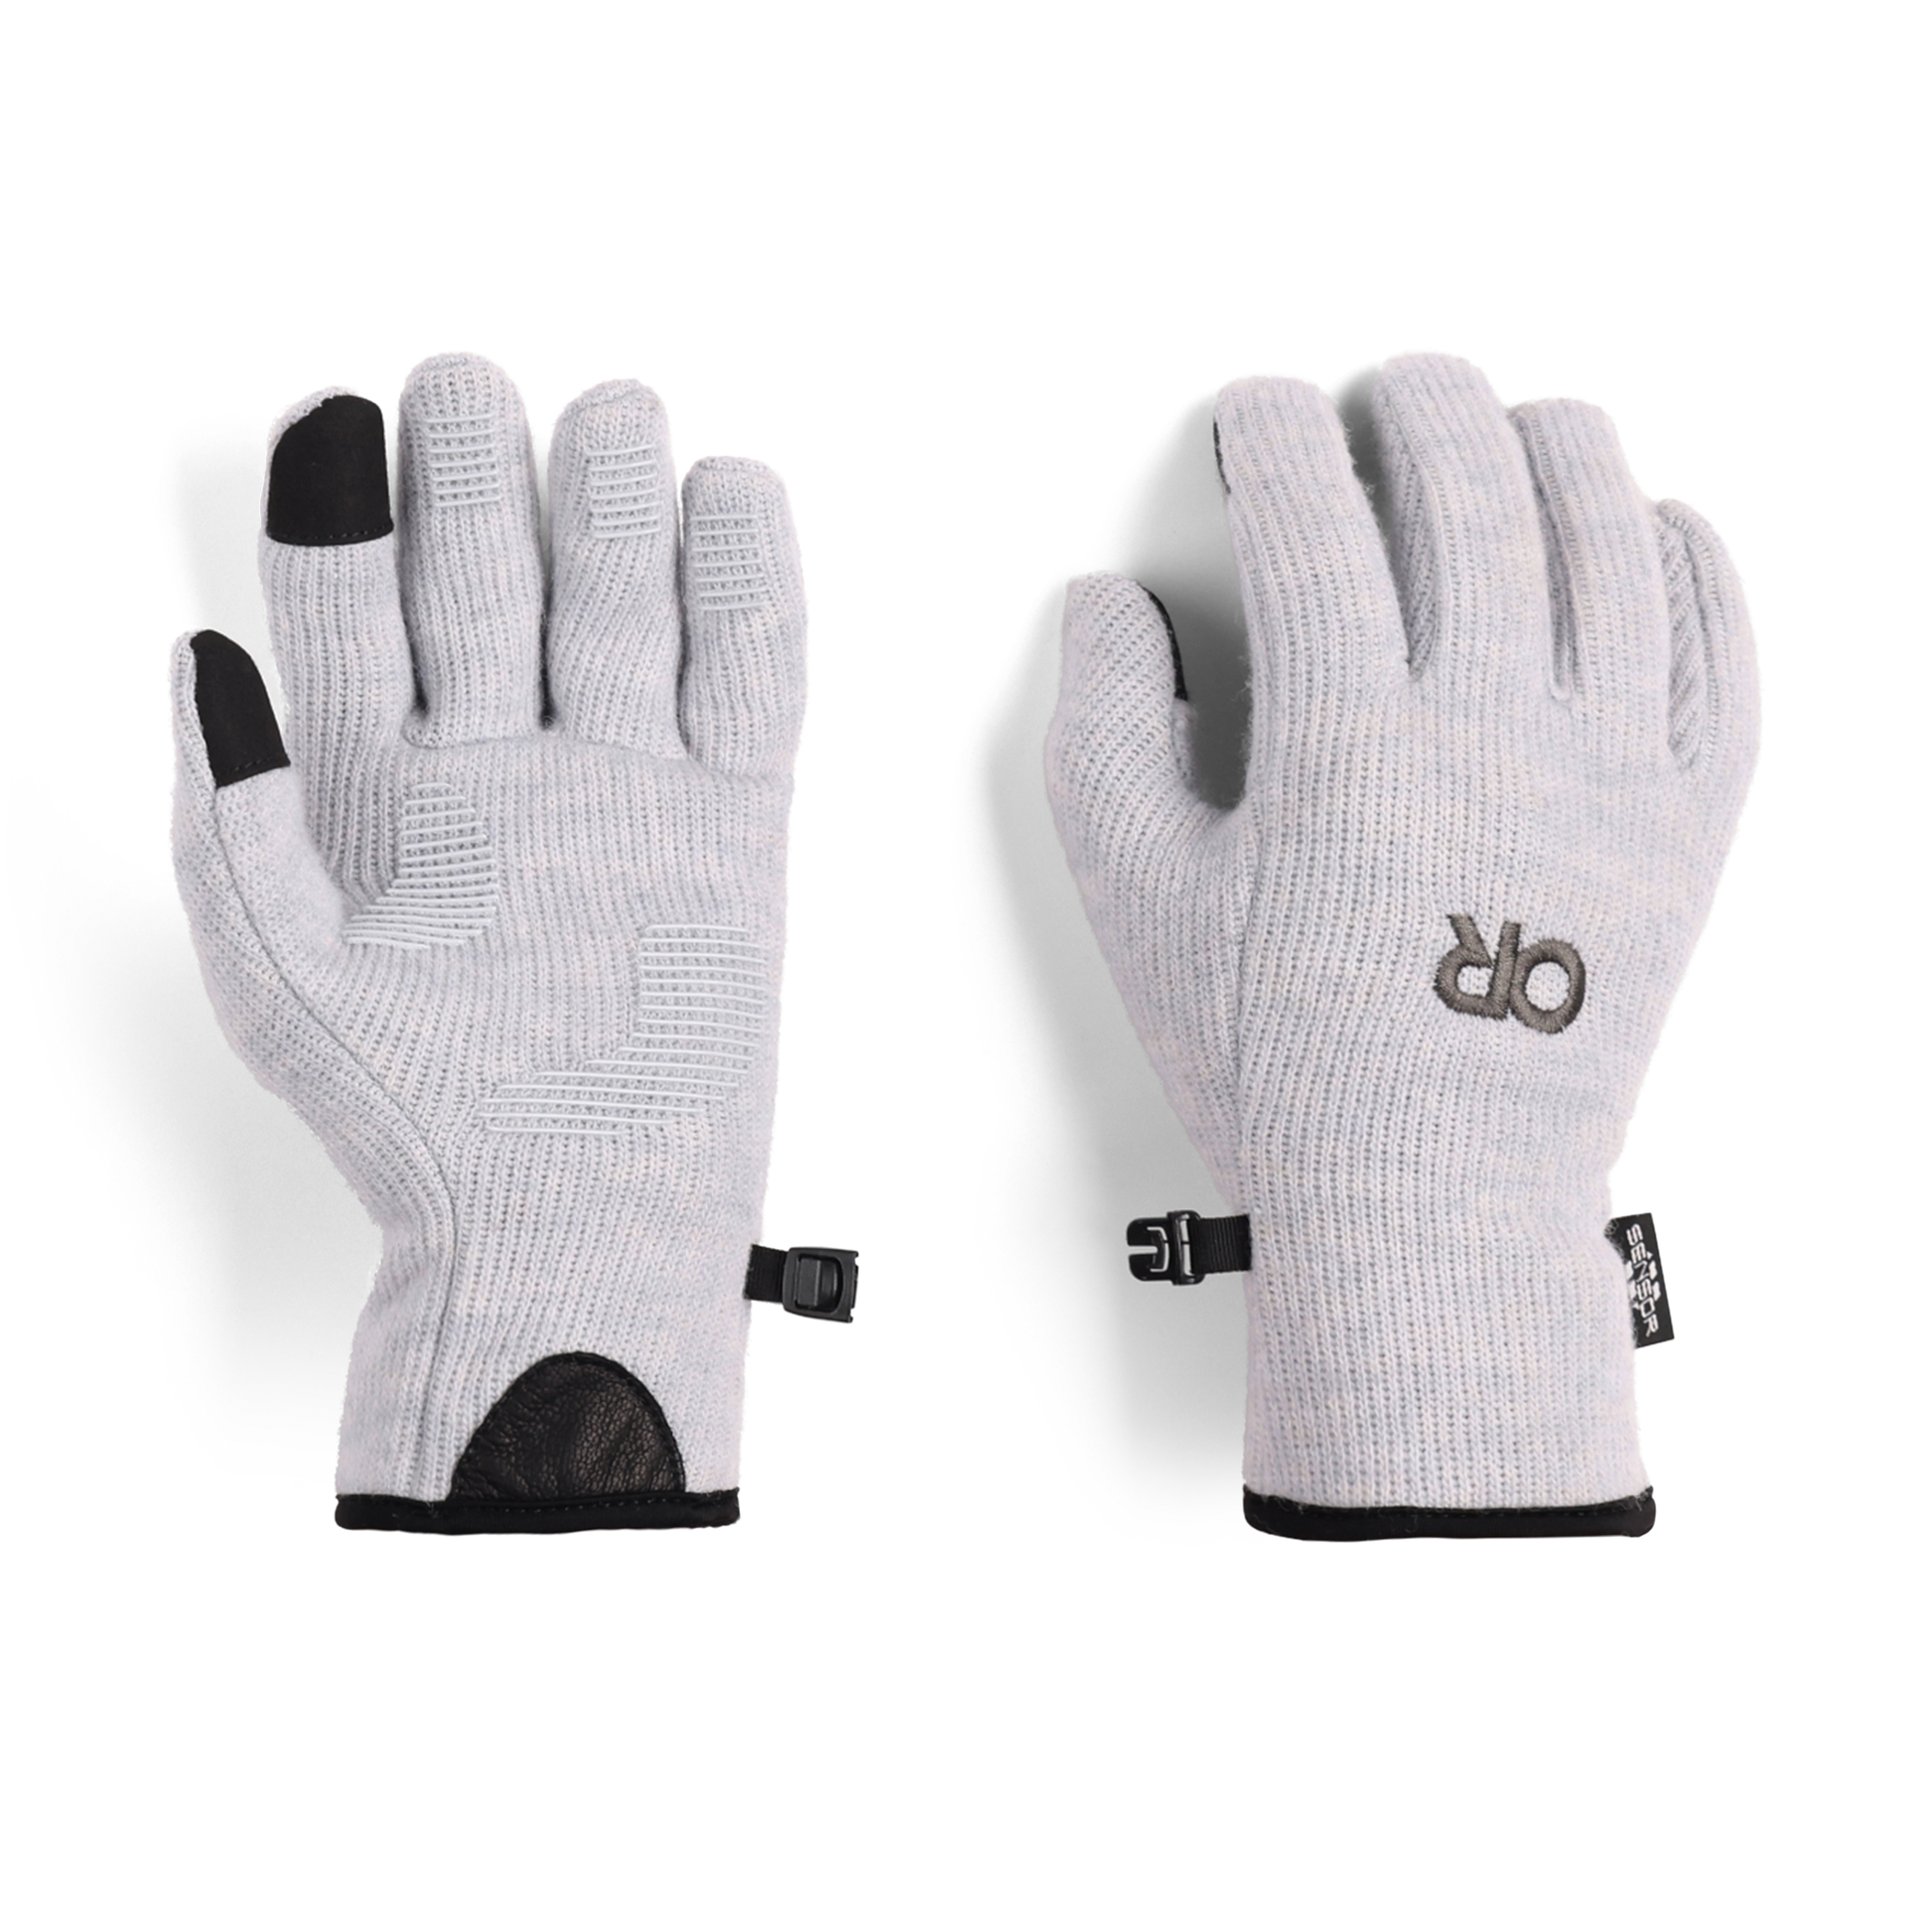 True Grip Women's General Purpose Gloves, Large